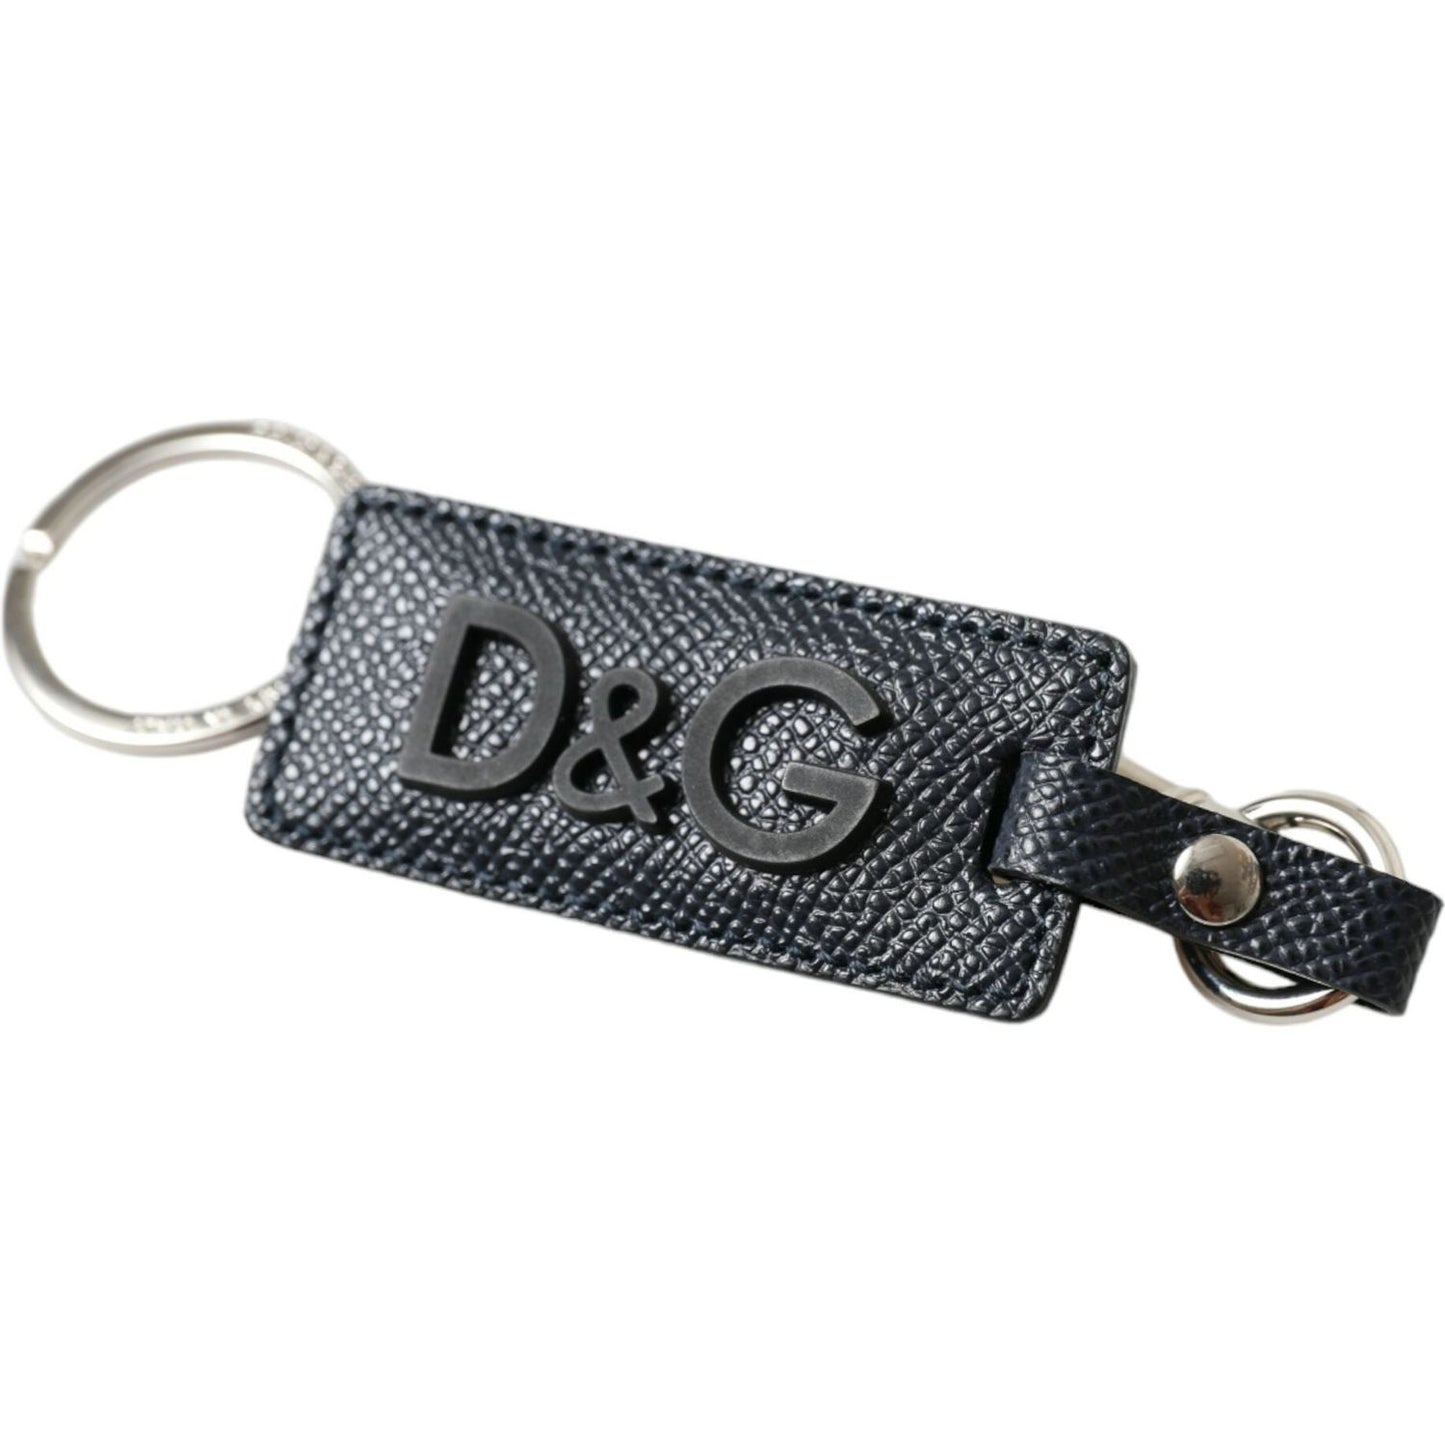 Dolce & Gabbana Elegant Leather Keychain in Black & Silver elegant-leather-keychain-in-black-silver